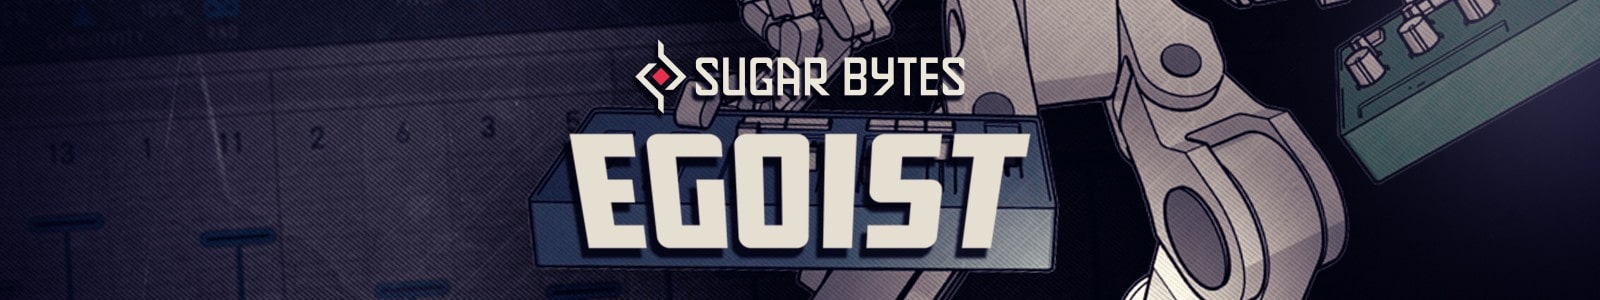 Egoist by Sugarbytes